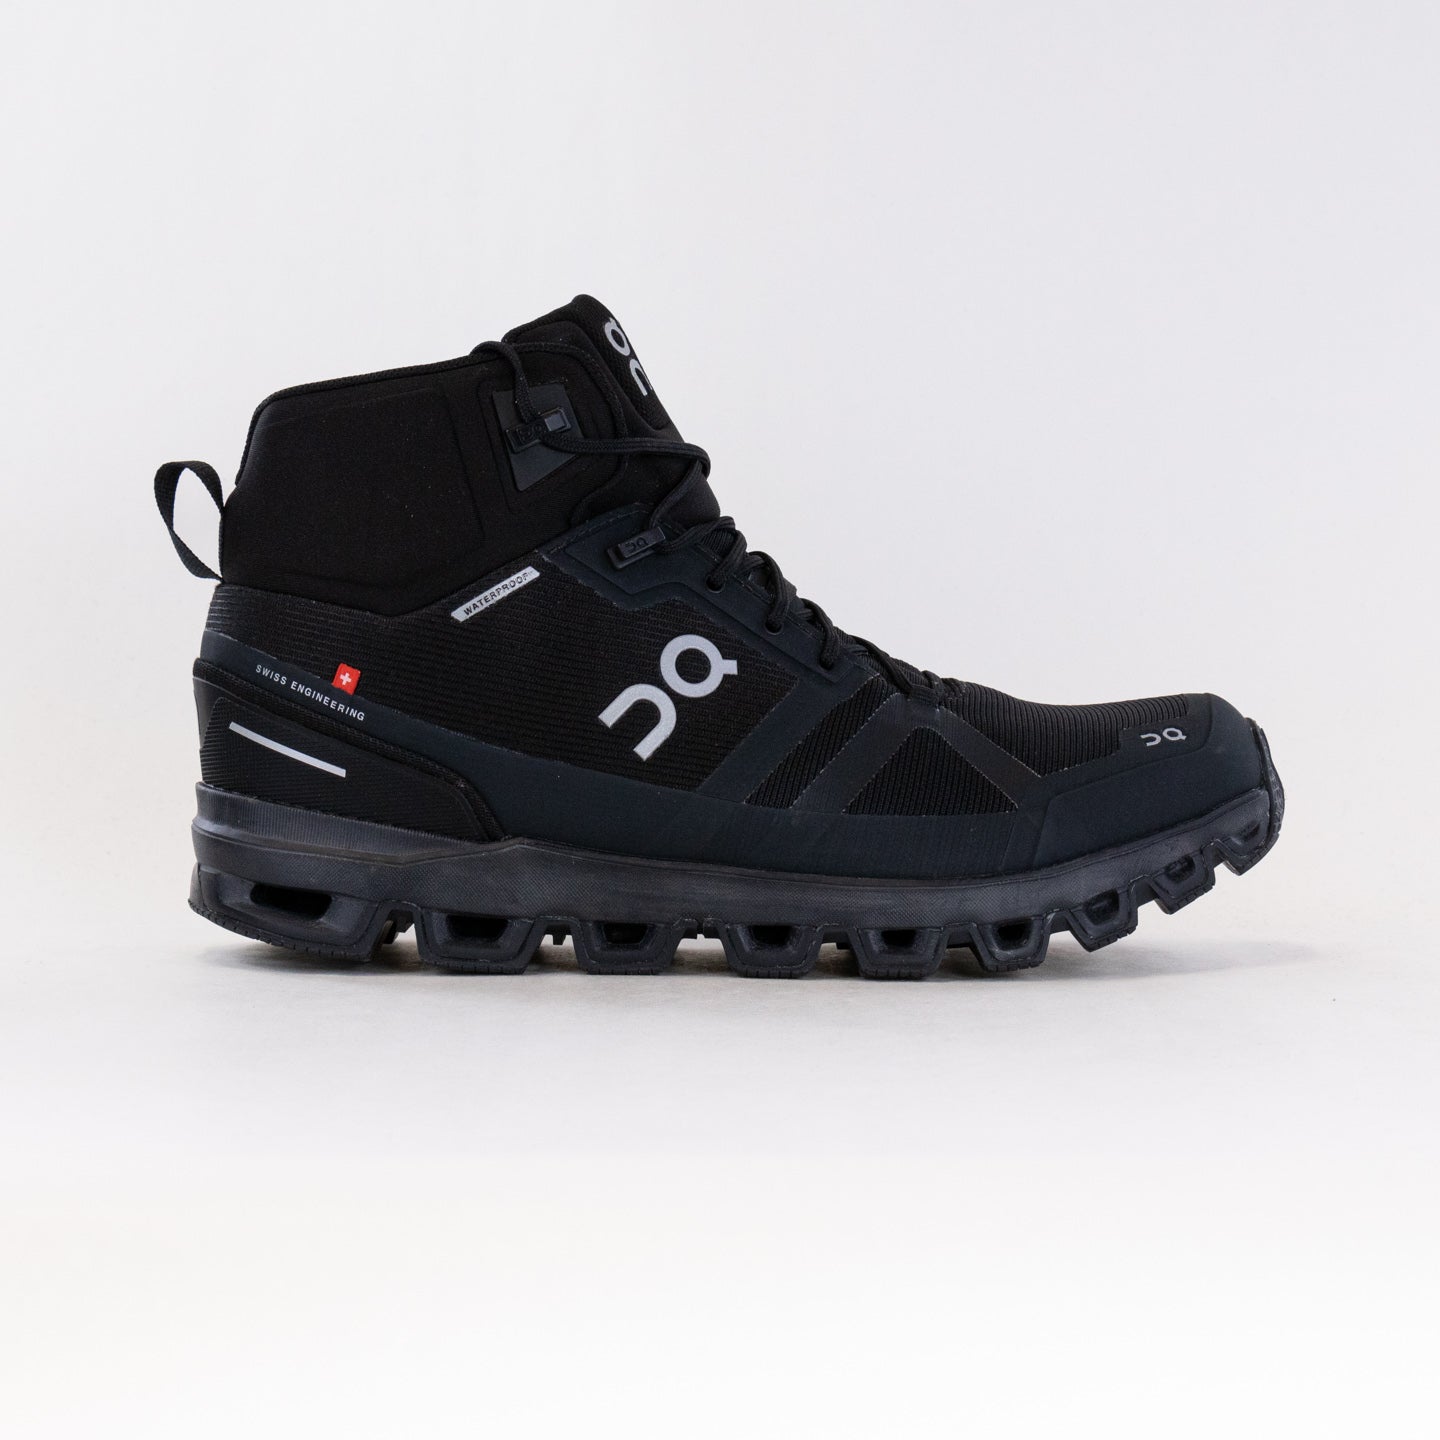 Men's Waterproof Boots & Shoes – Chiappetta Shoes